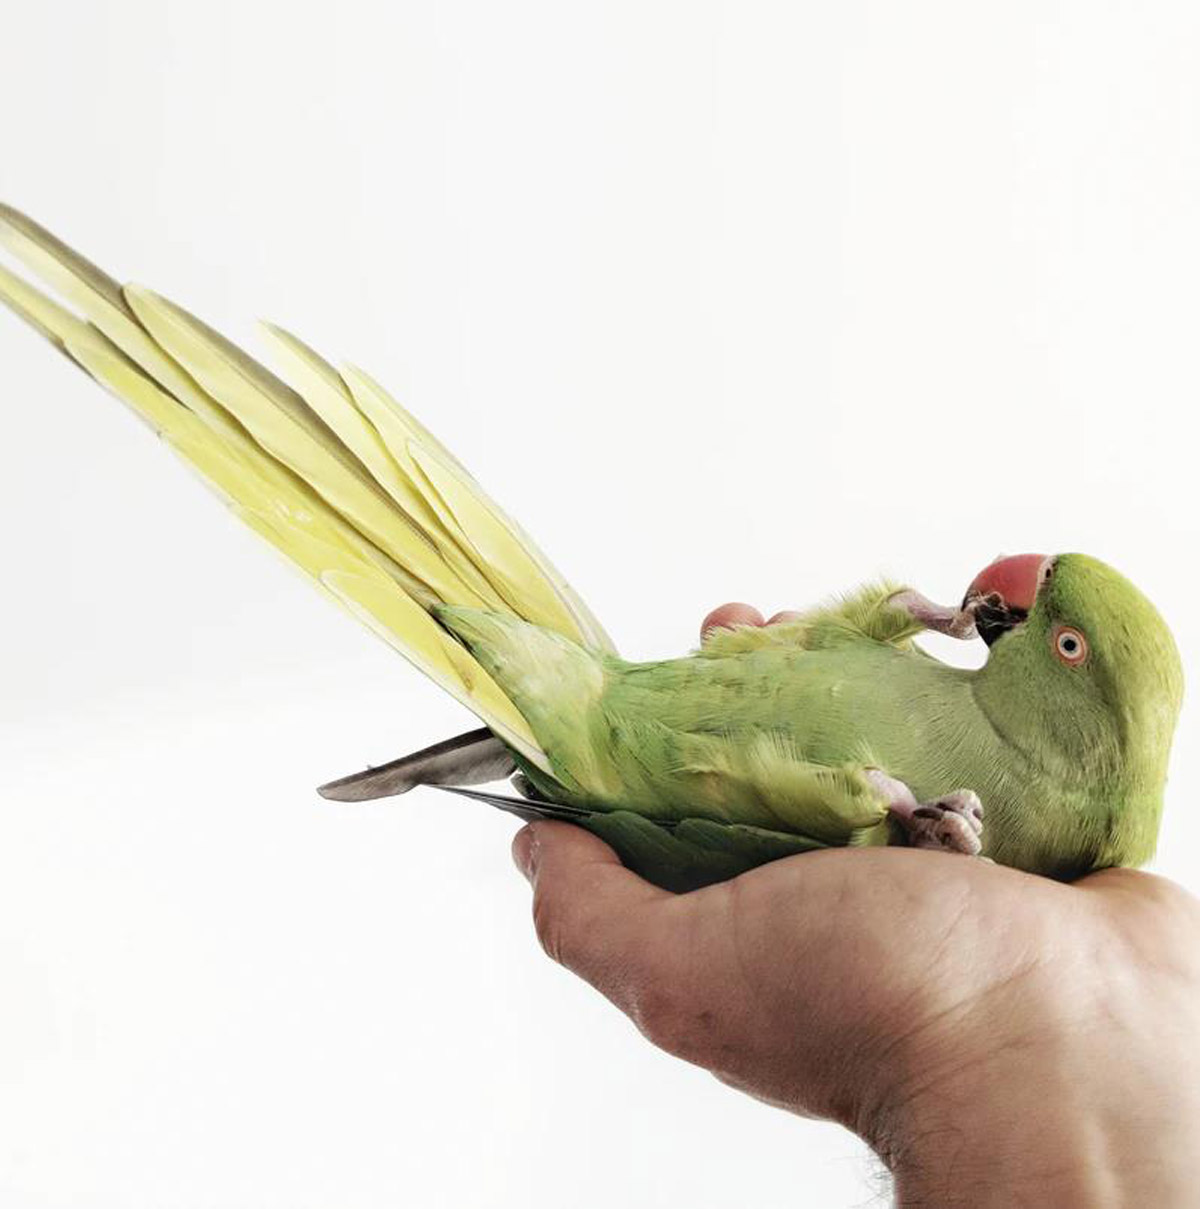 Bird Talk: How to Teach Your Pet Bird to Speak